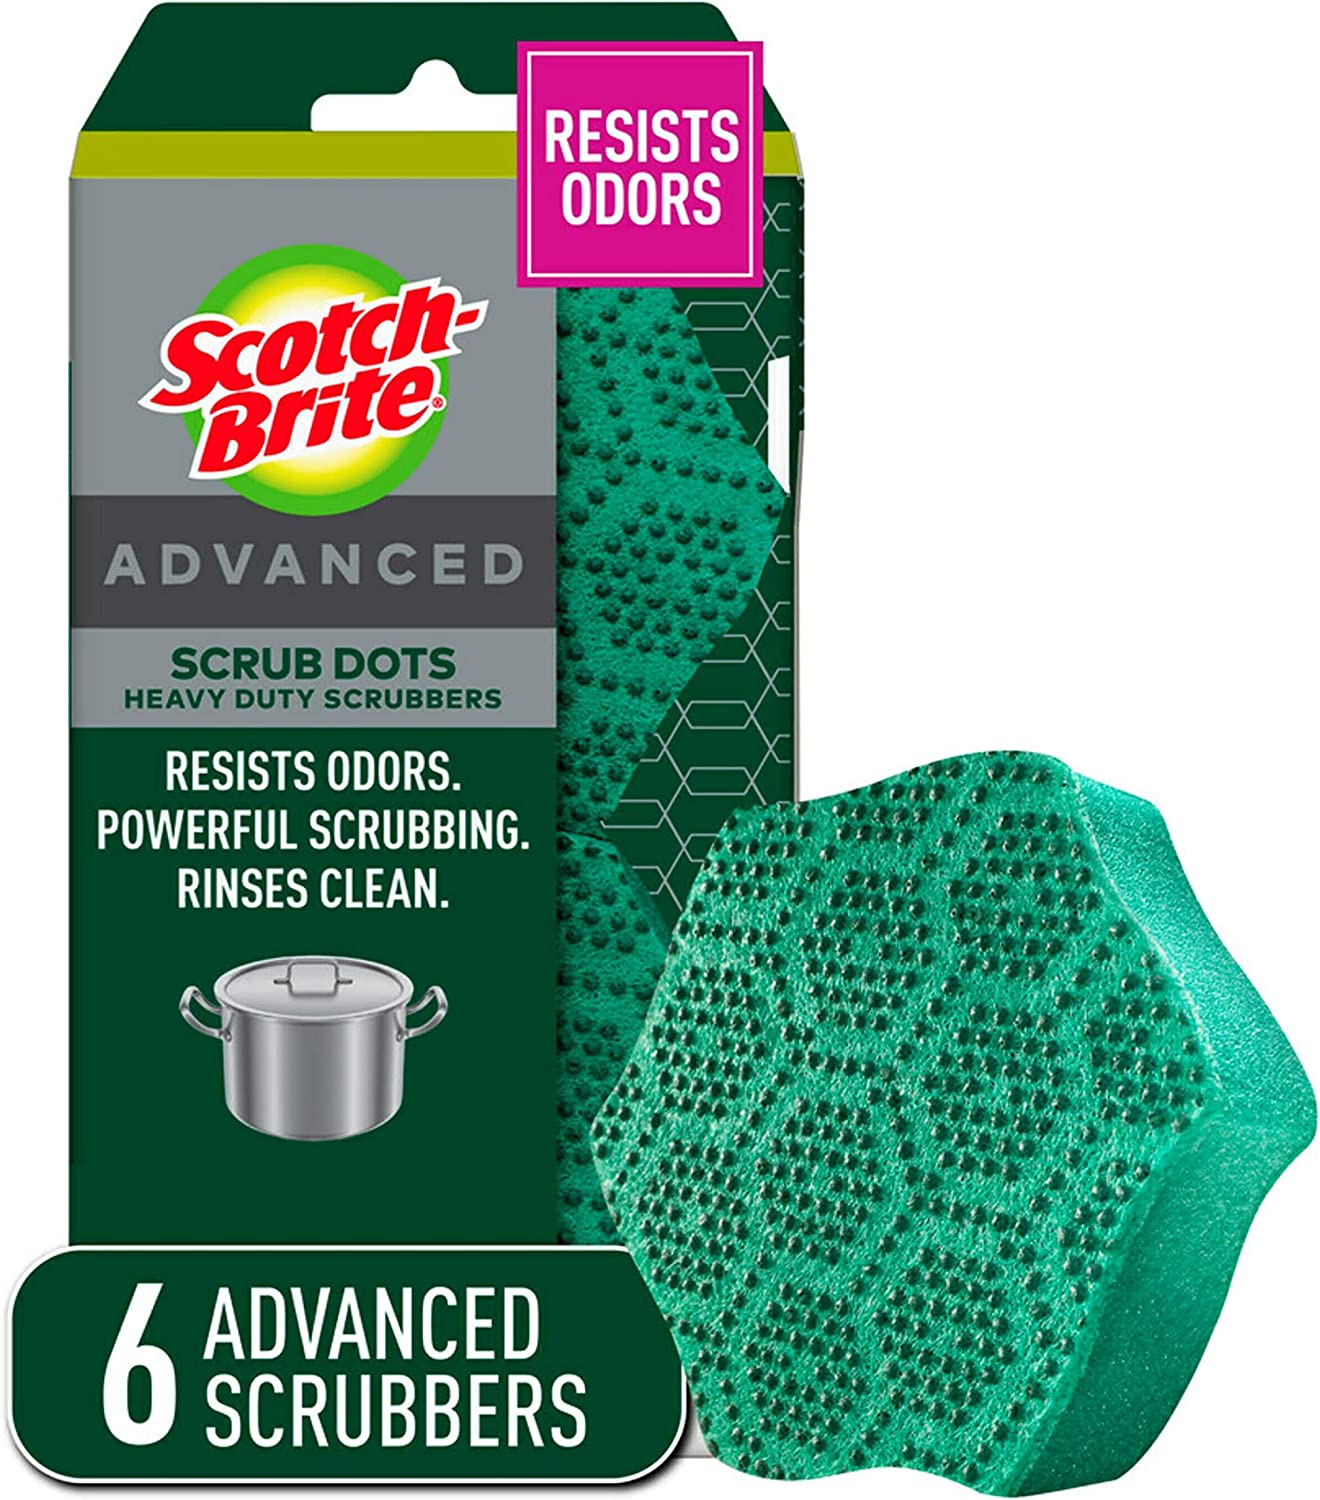 Scotch-Brite Scrub Dots Advanced Heavy Duty Scrubbers\ 6 Scrub Sponges